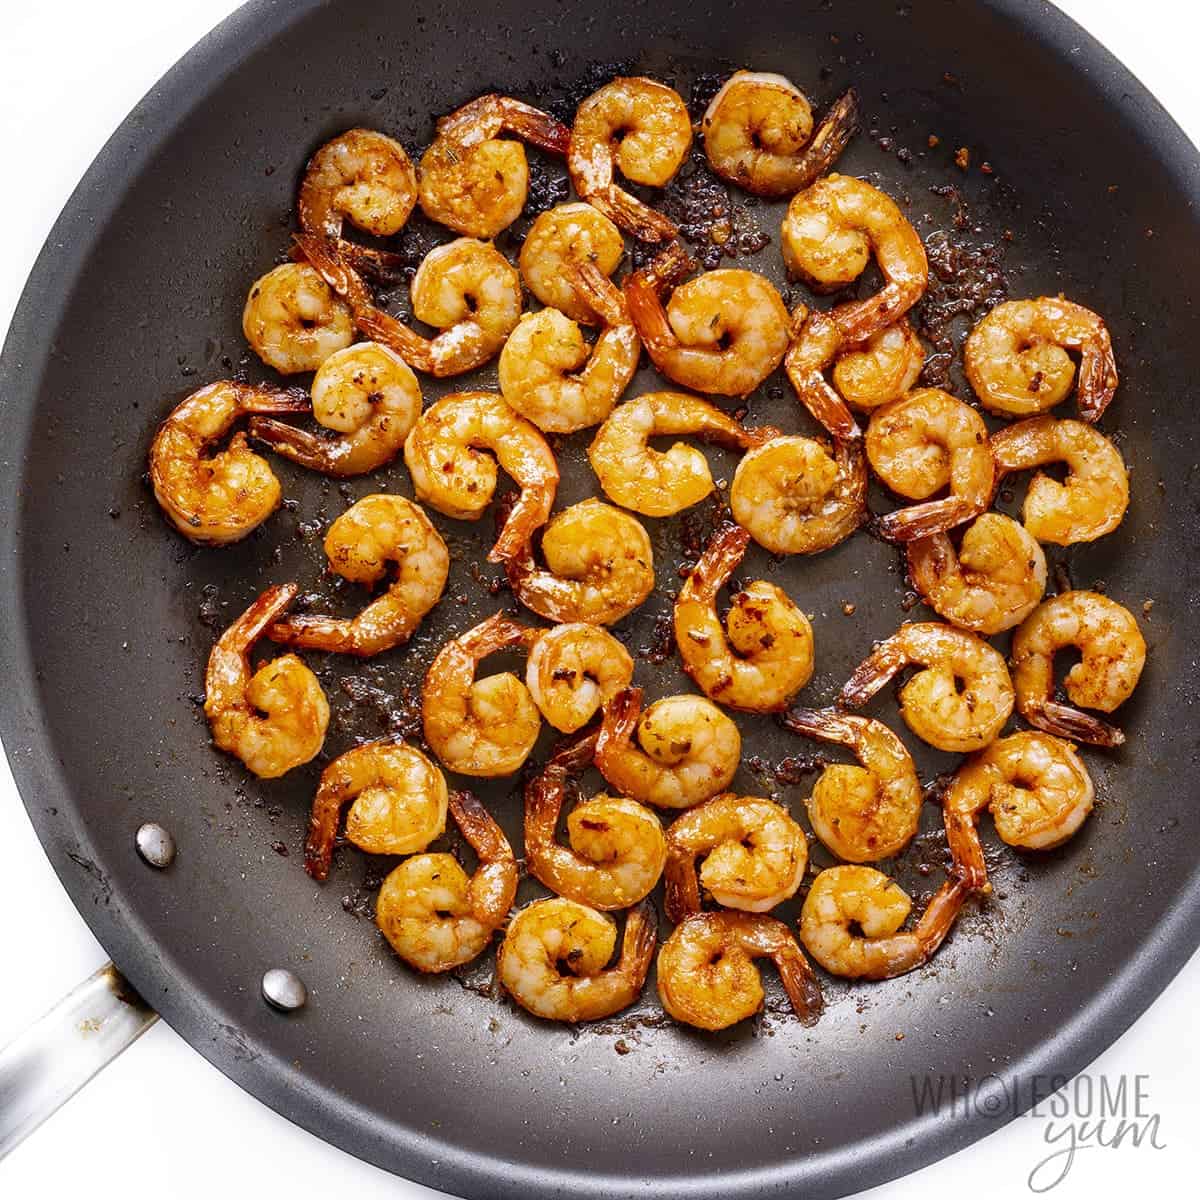 Cajun shrimp cooking in a skillet